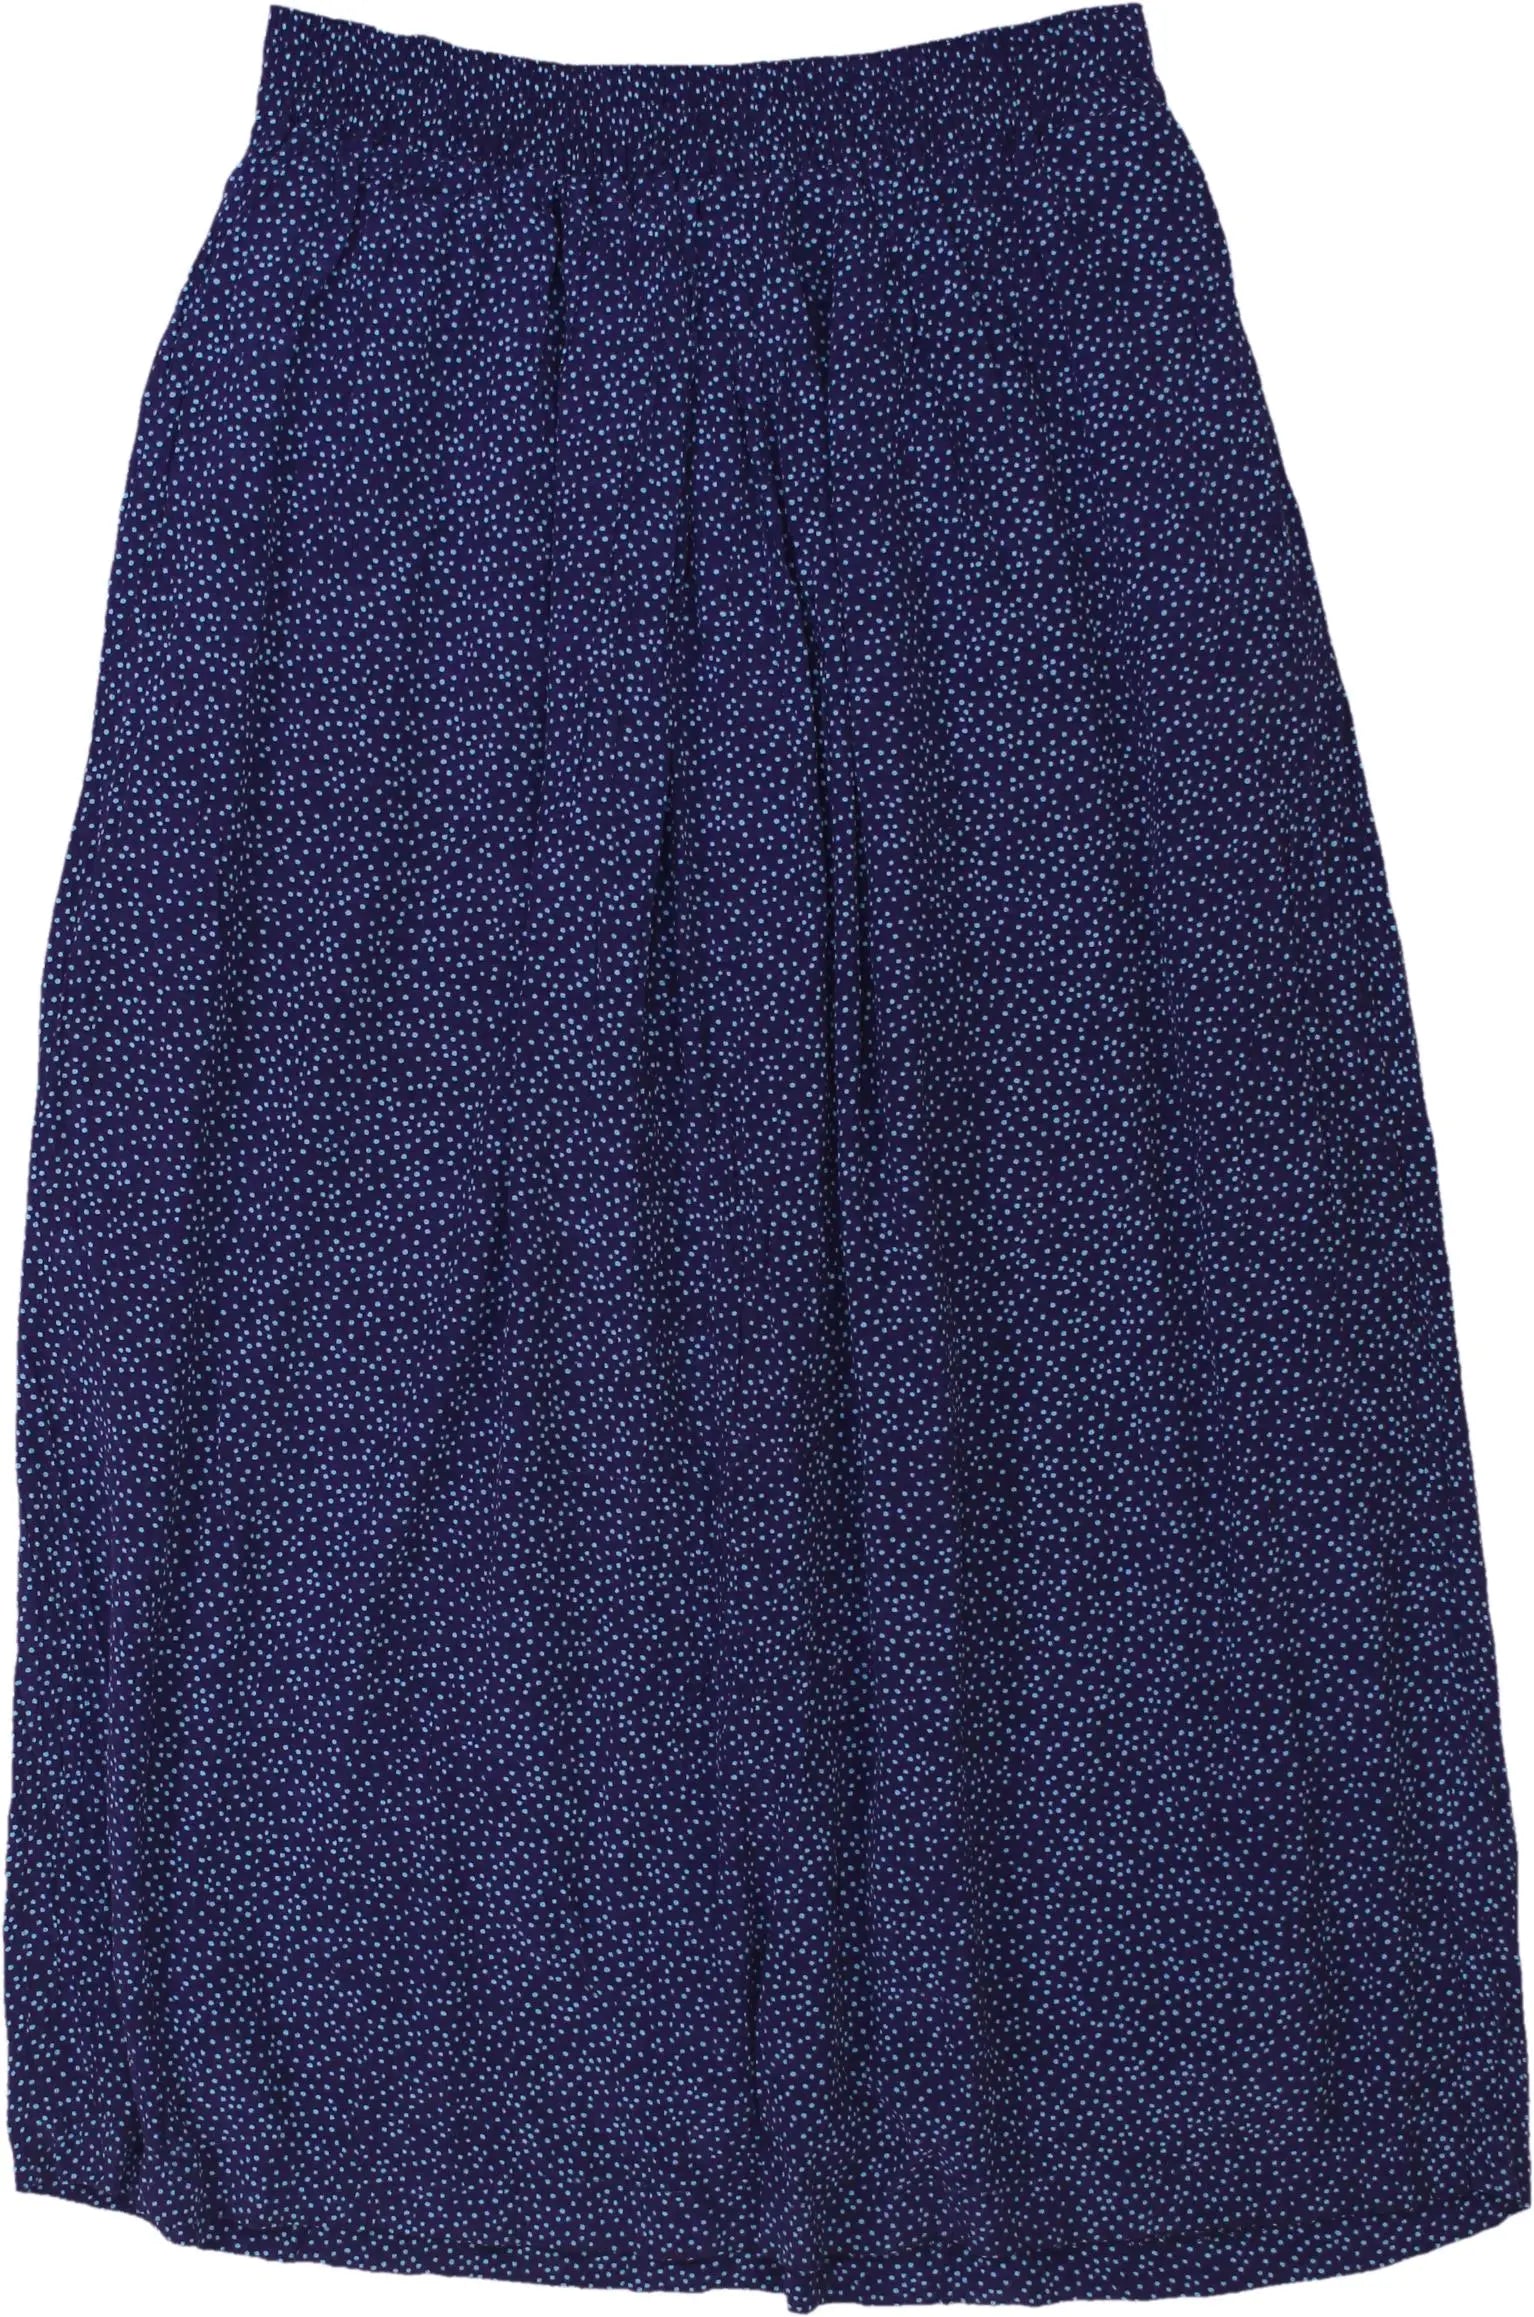 Sigikid - 80s Polkadot Skirt- ThriftTale.com - Vintage and second handclothing